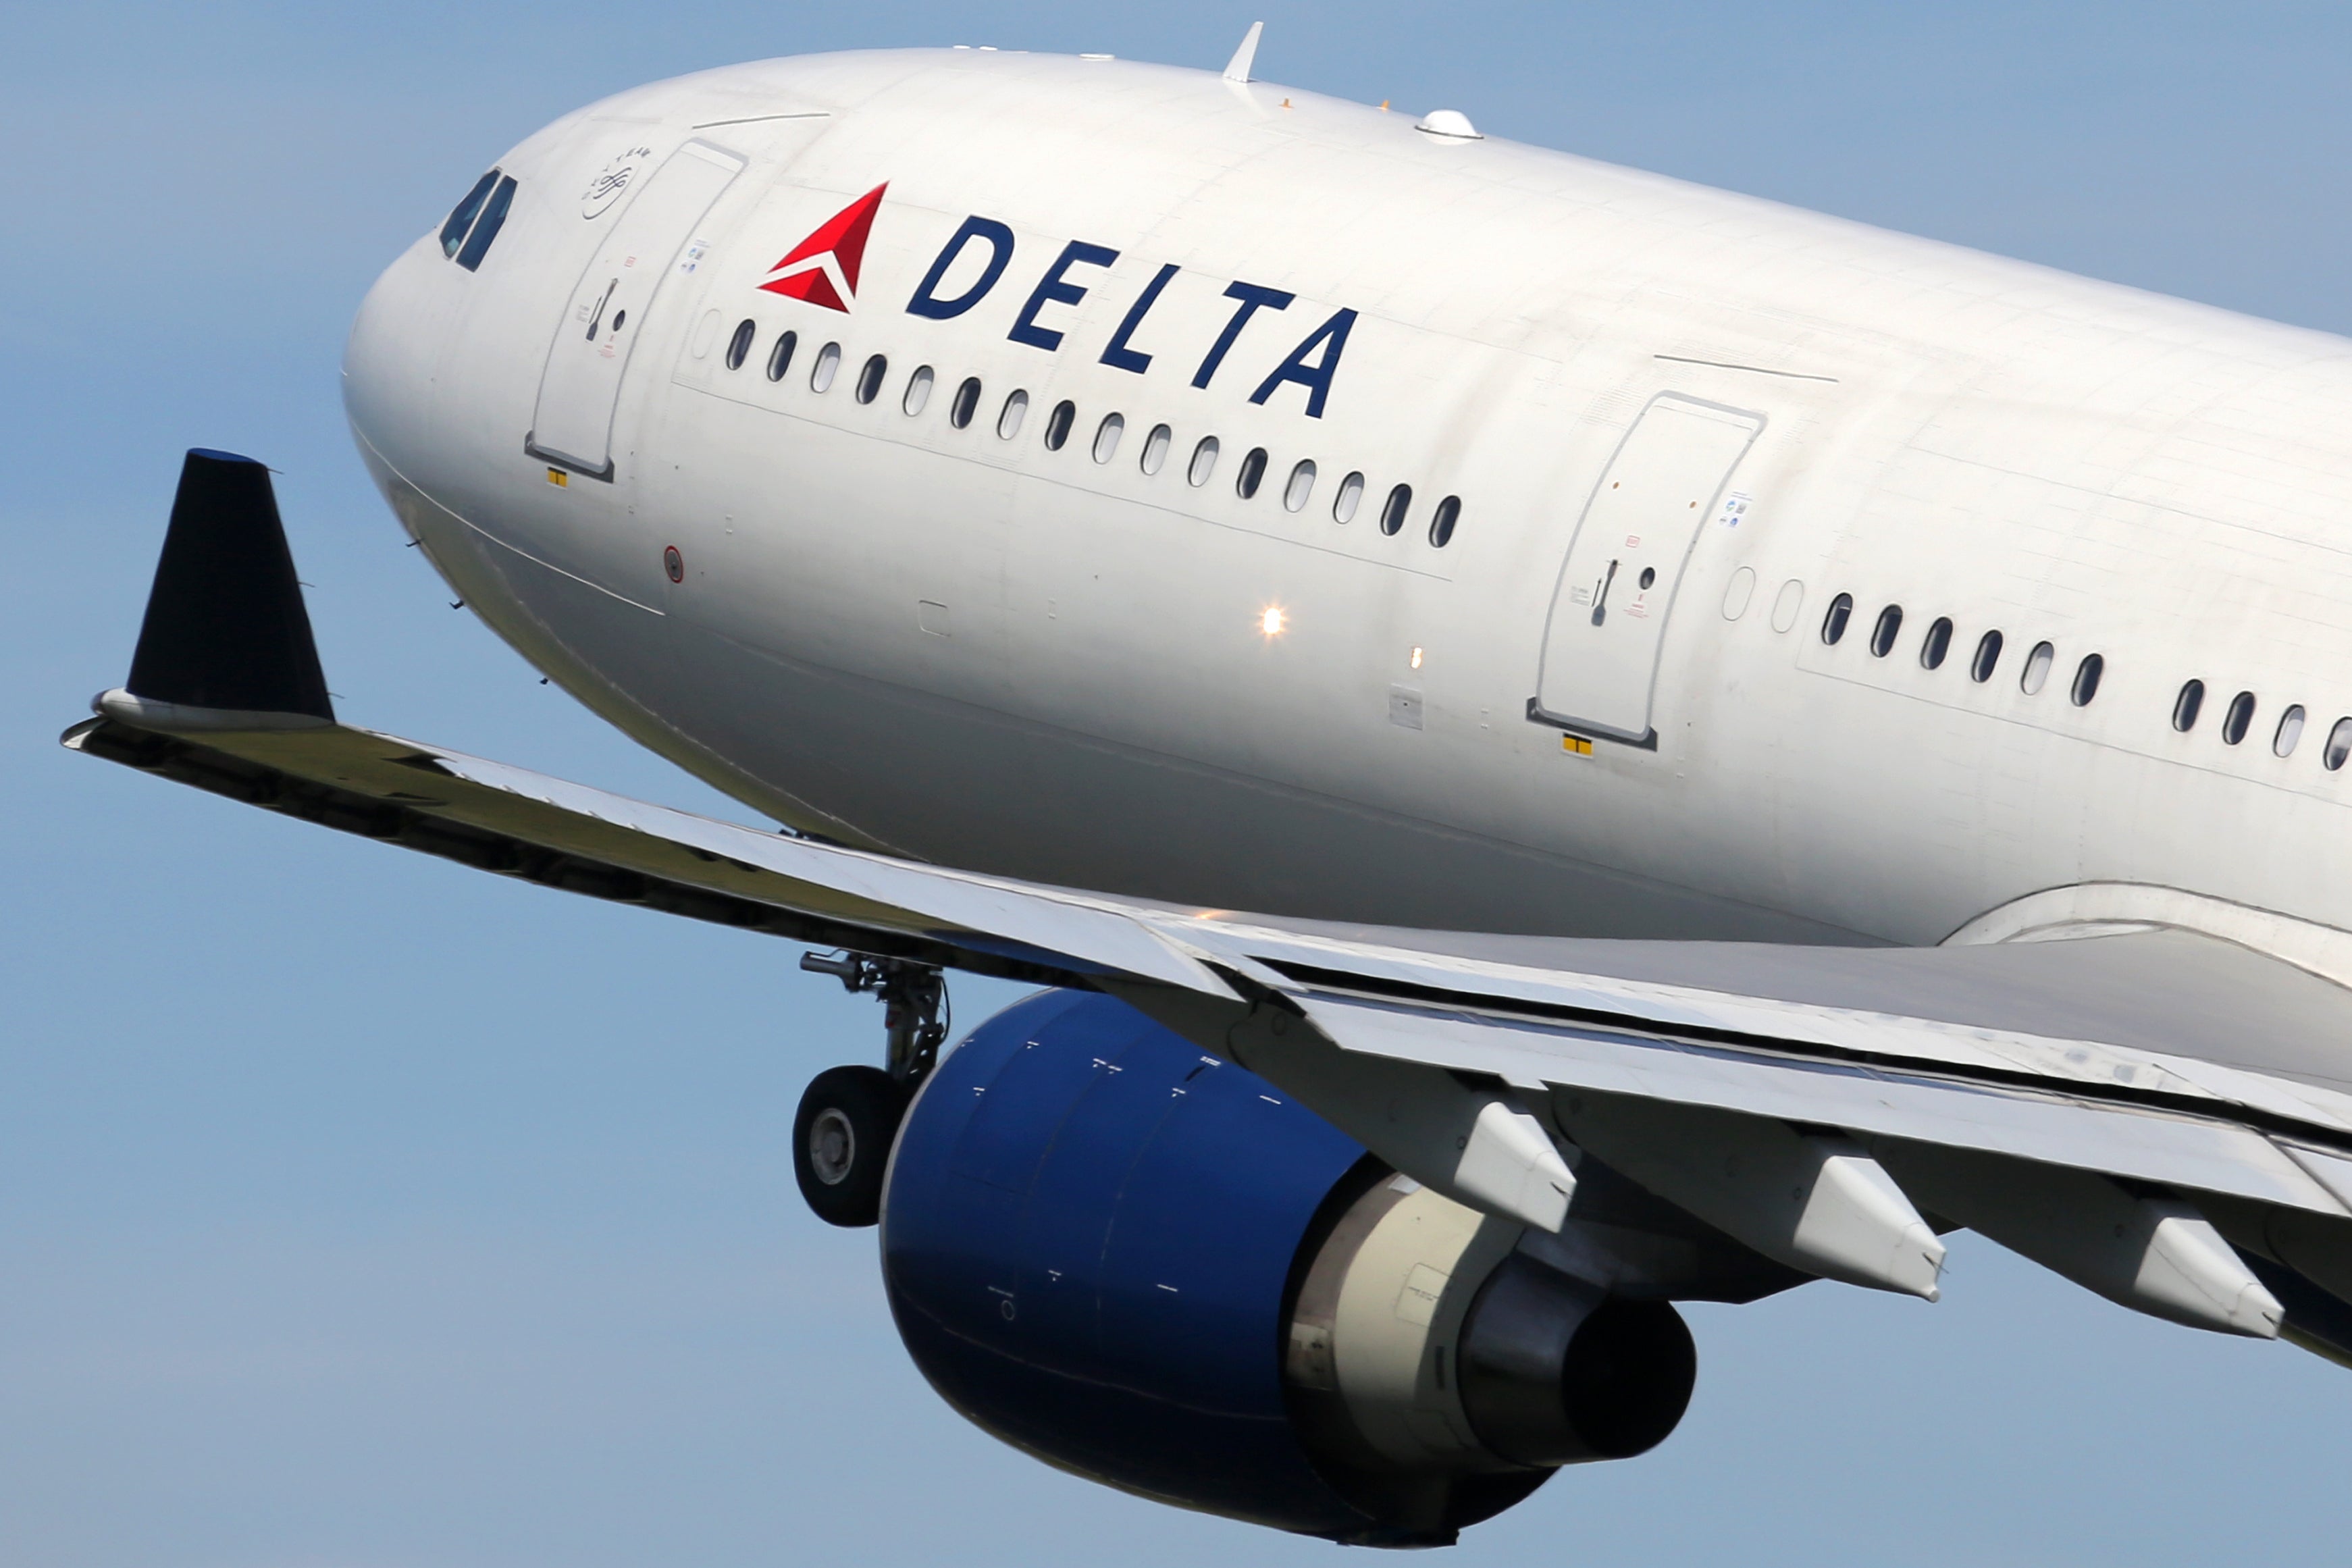 A DeltaAirbus A330 departs Amsterdam